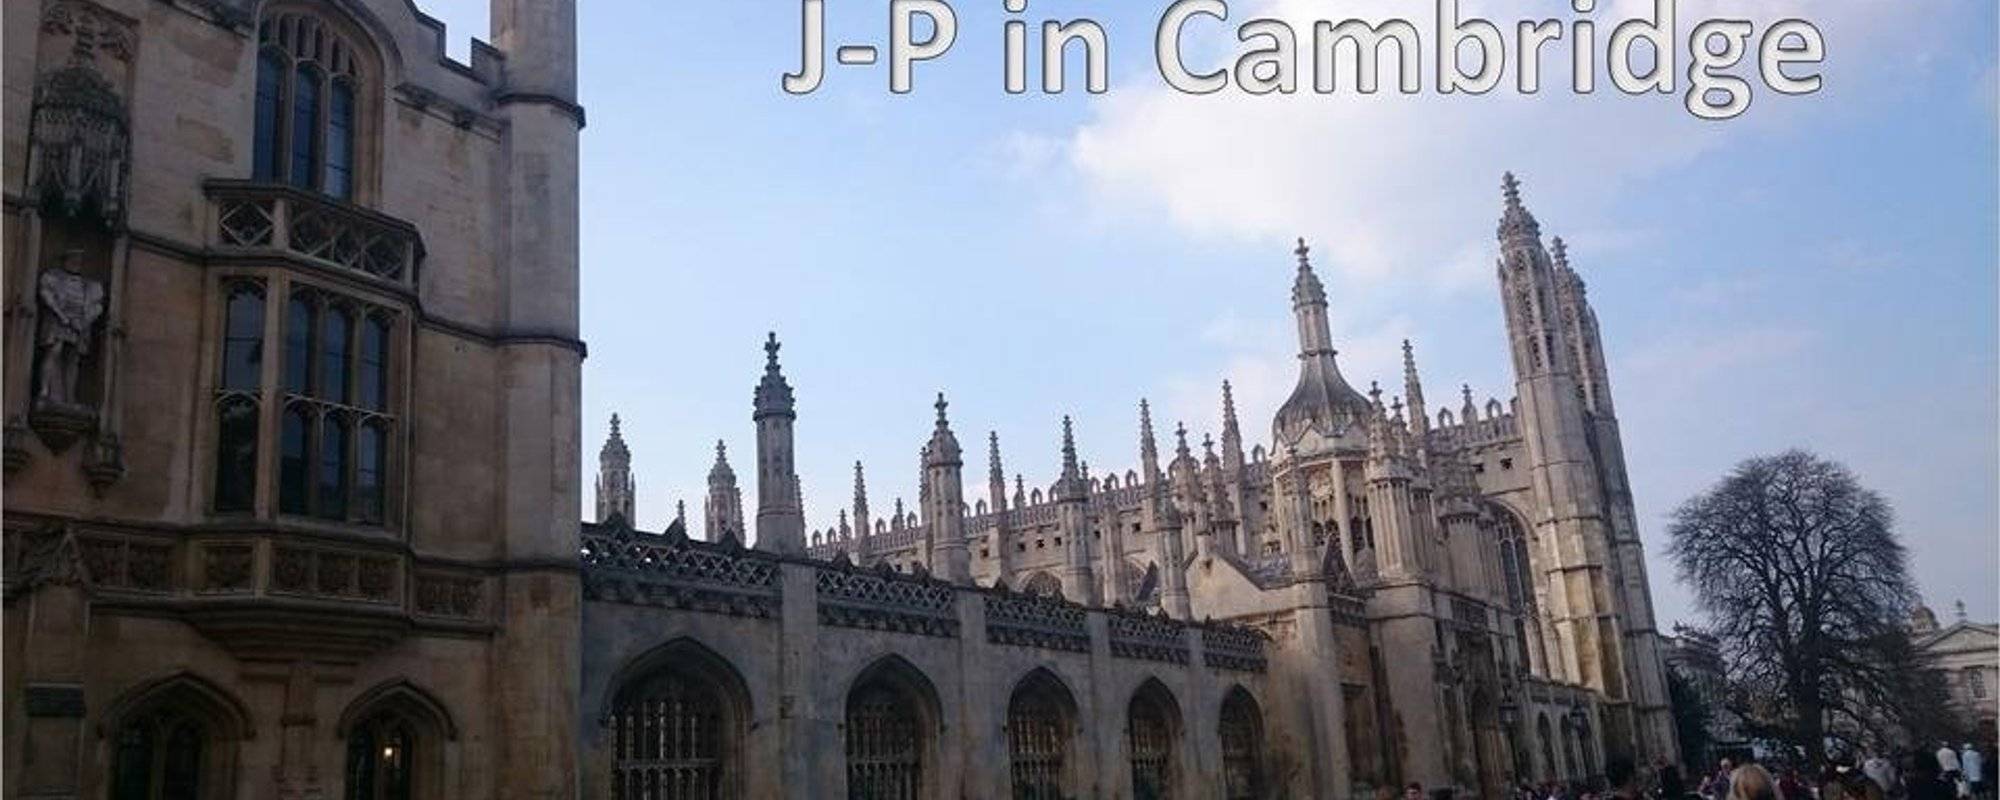 My visit of Cambridge